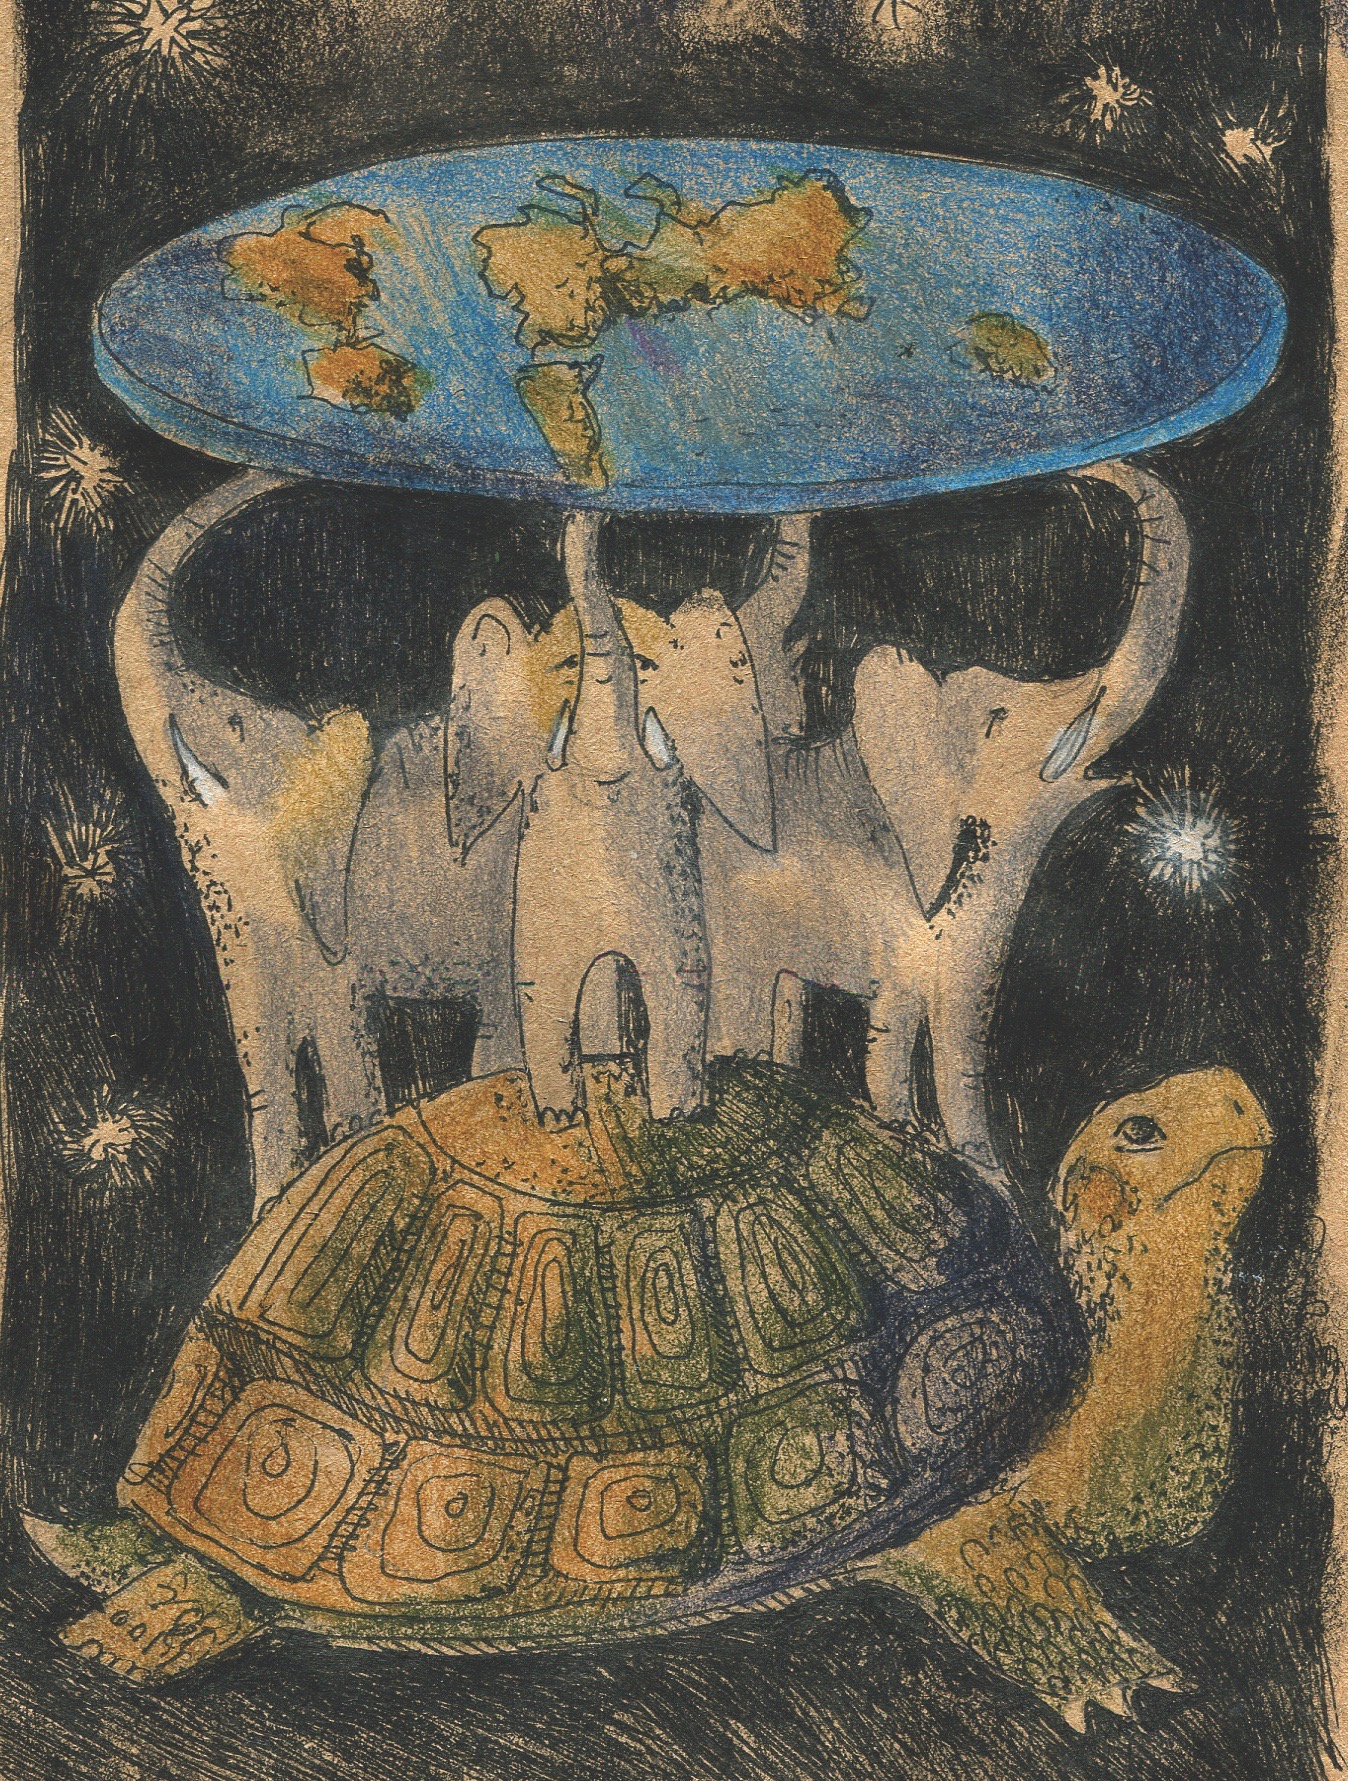 3 слона на черепахе. Земля на черепахе. Земля на слонах и черепахе. Плоская земля на 3 слонах и черепахе. Мир на черепахе.